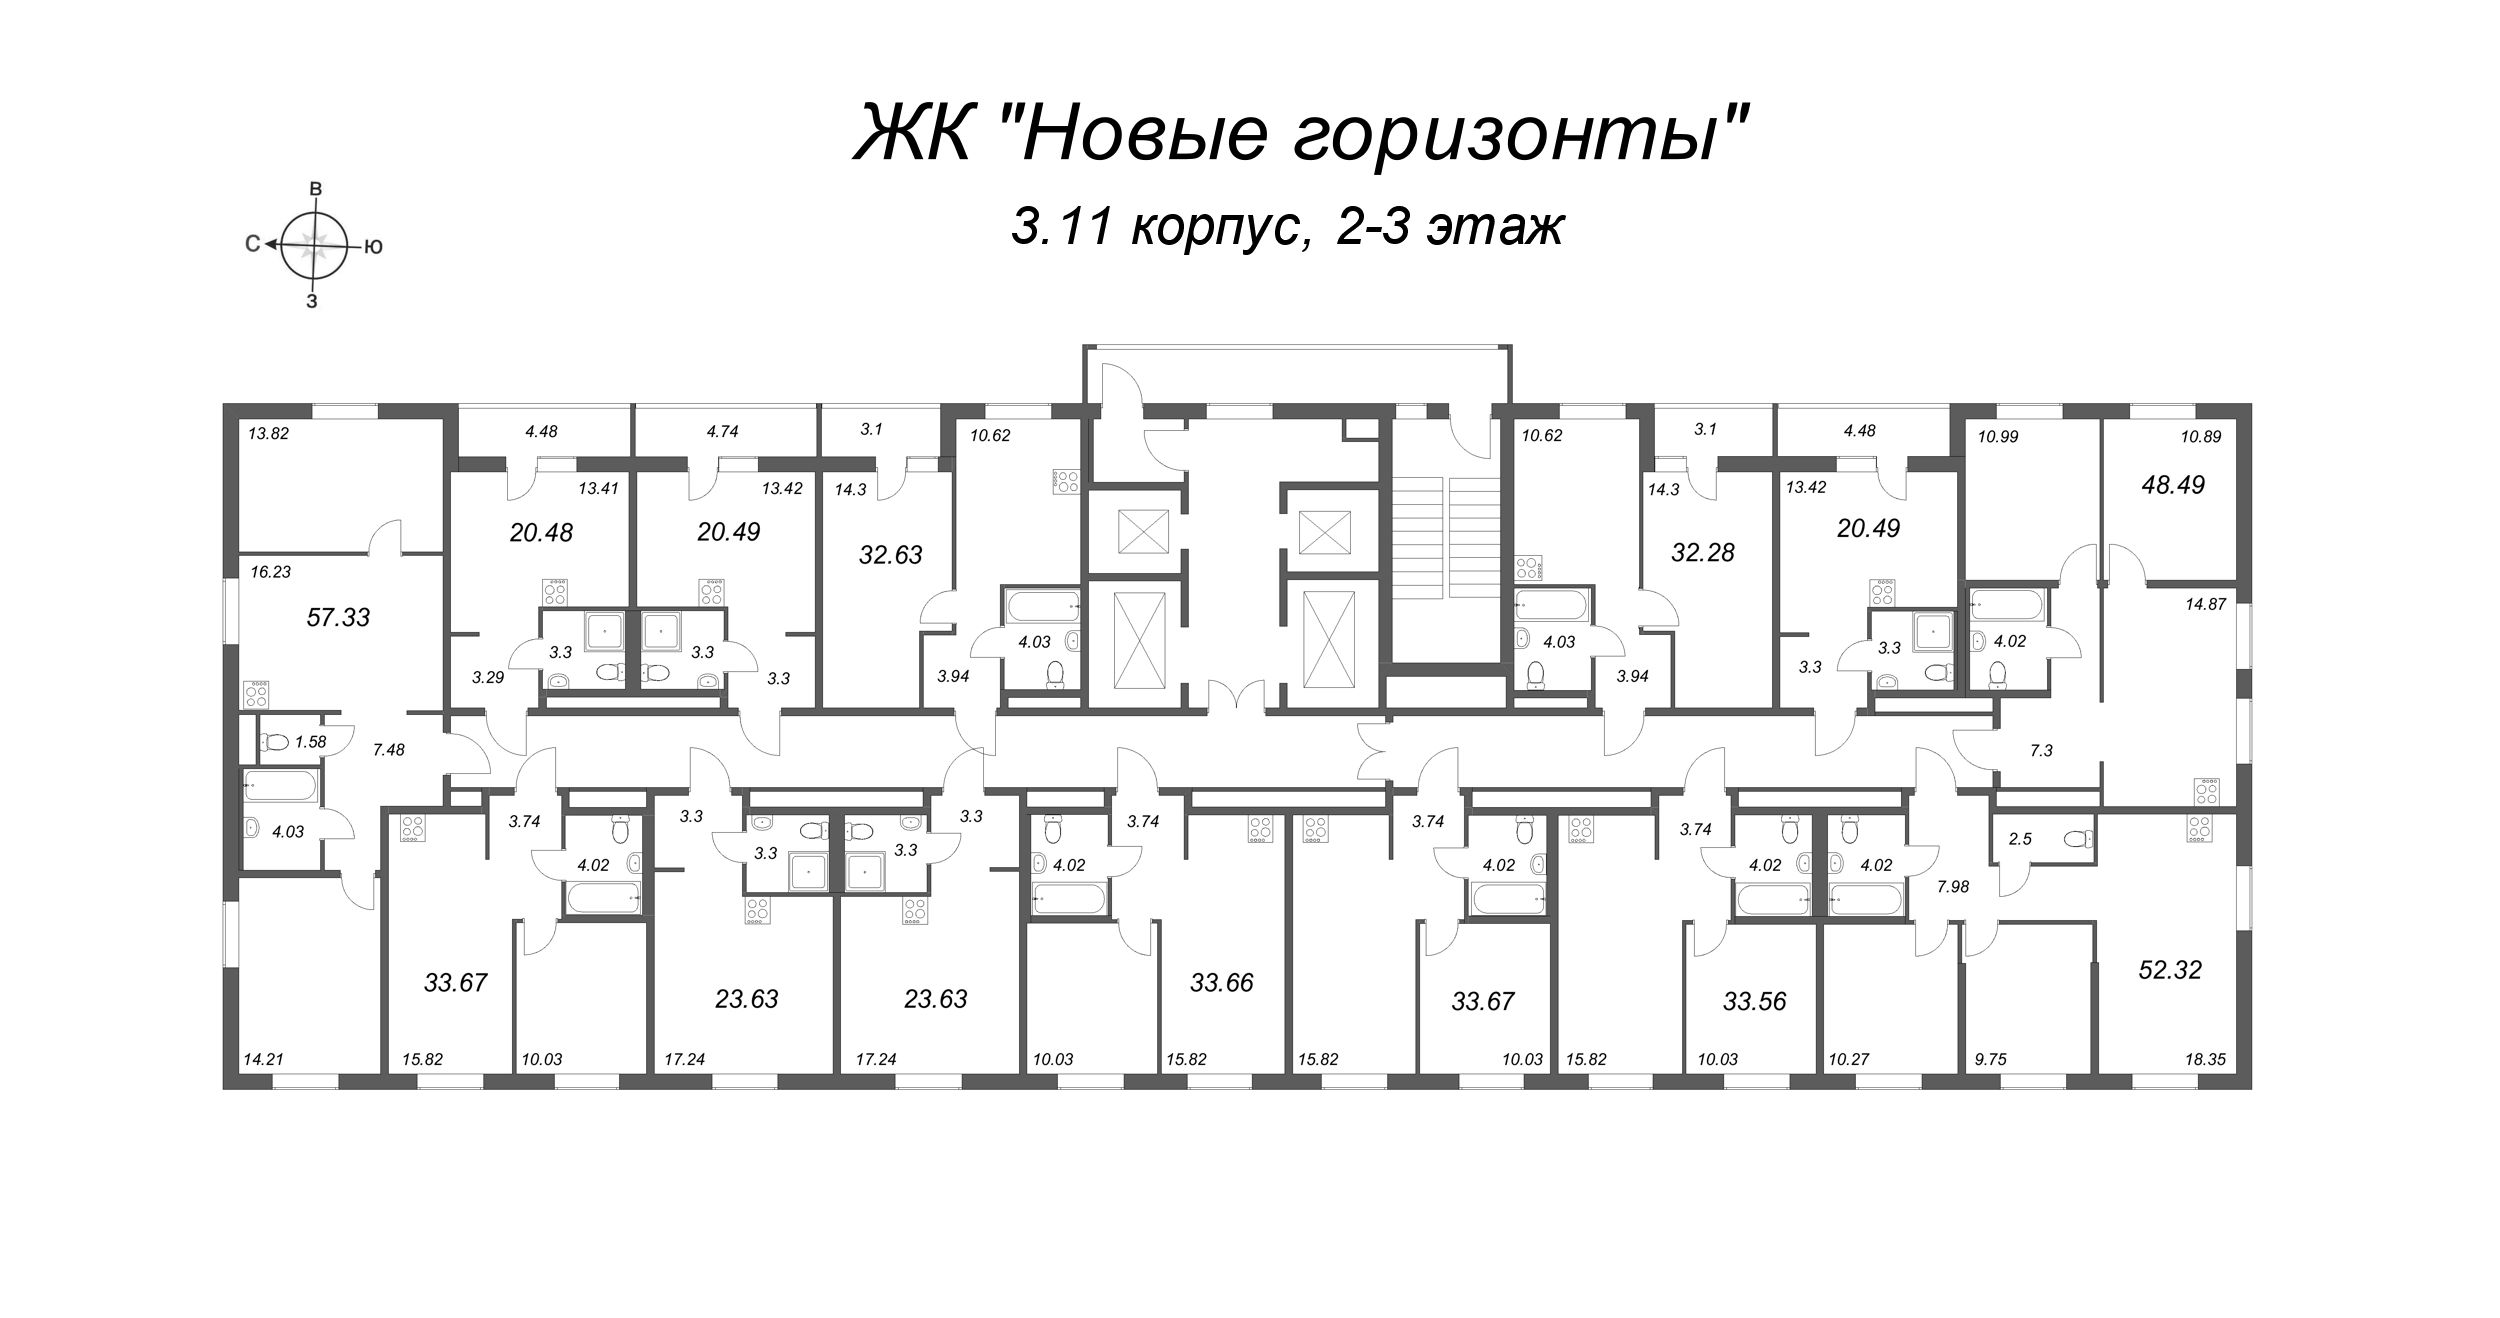 2-комнатная (Евро) квартира, 33.67 м² - планировка этажа